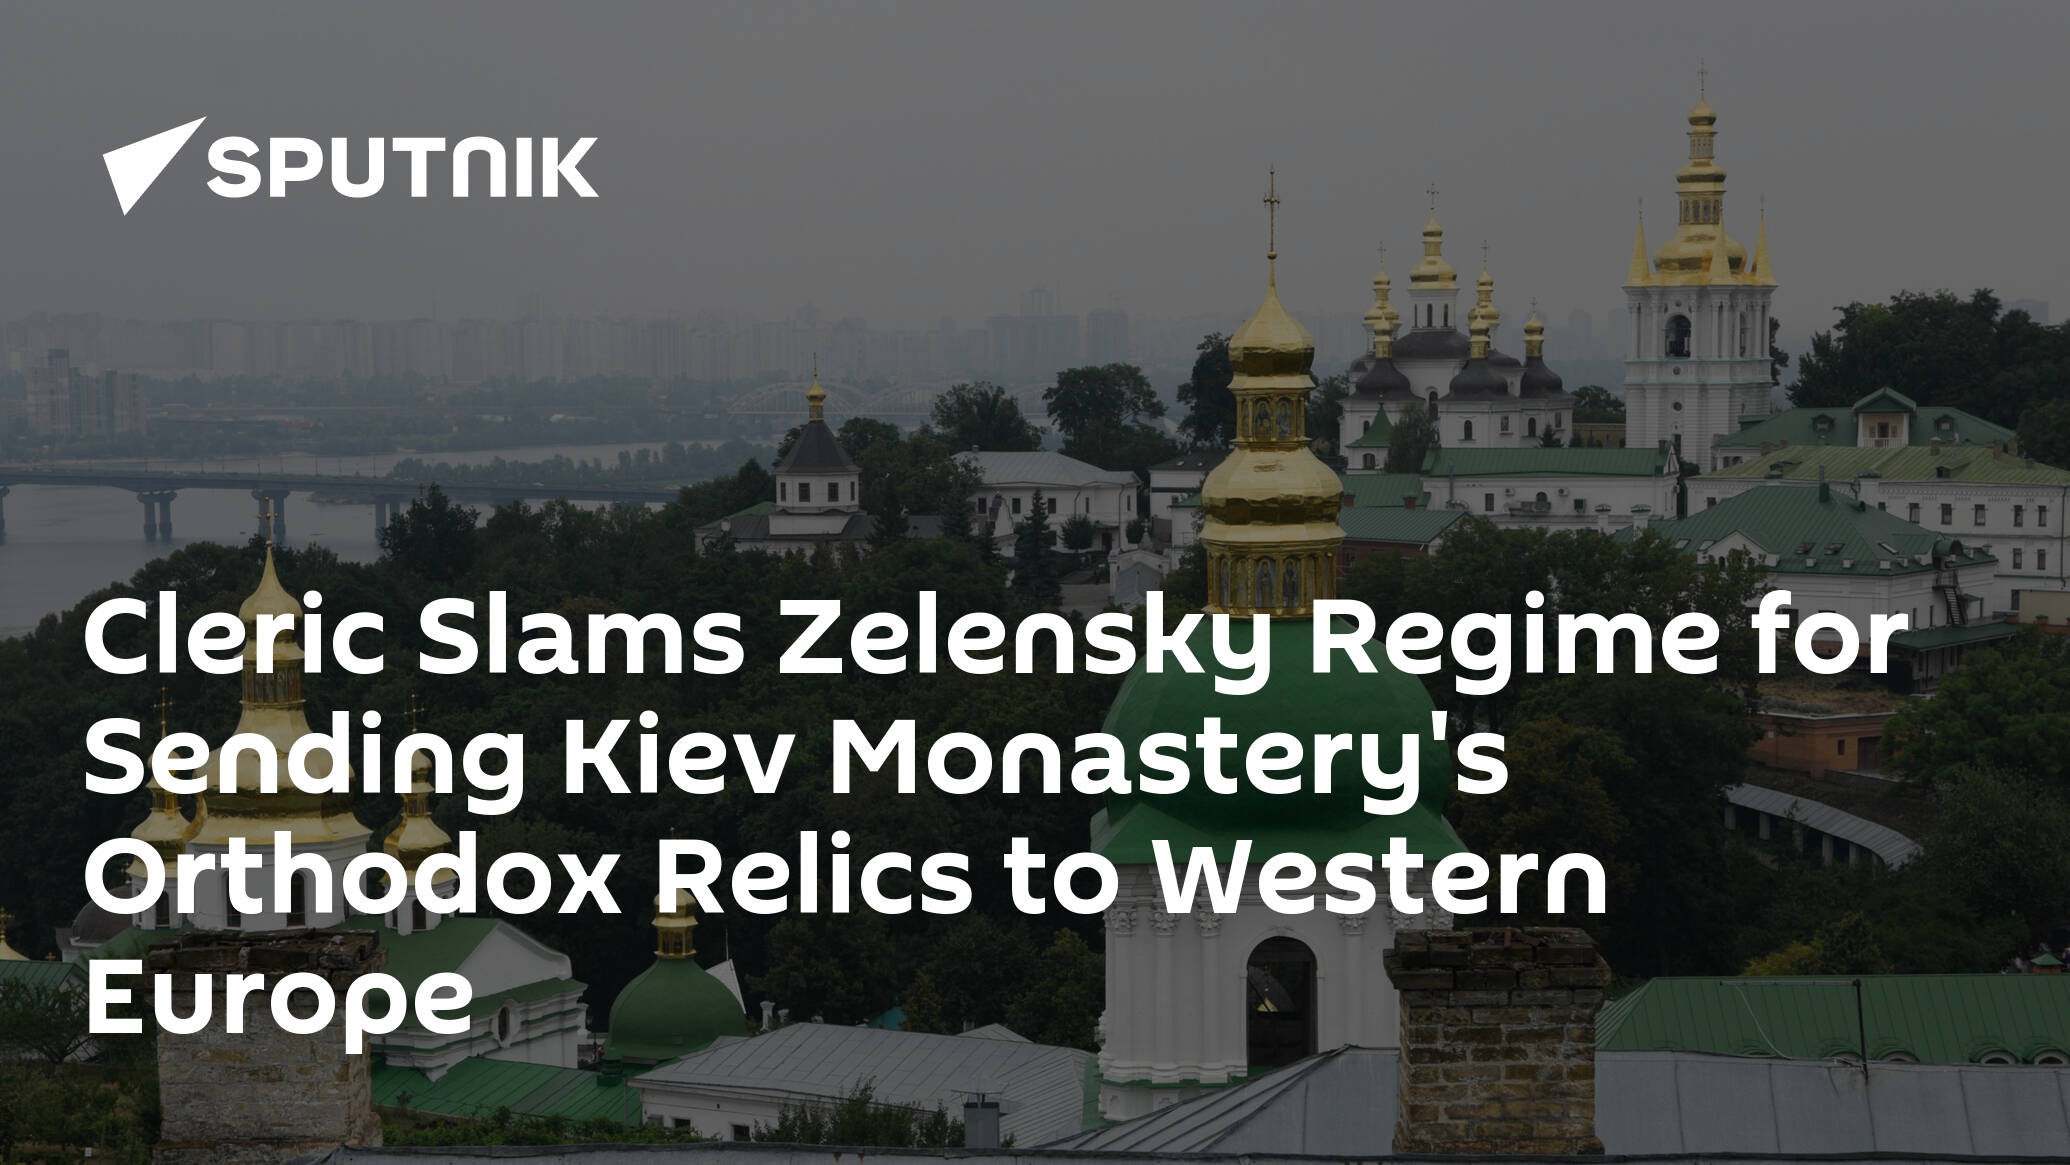 Ukraine Disrespects Faith by Moving Kiev-Pechersk Lavra Relics to W. Europe – Archpriest